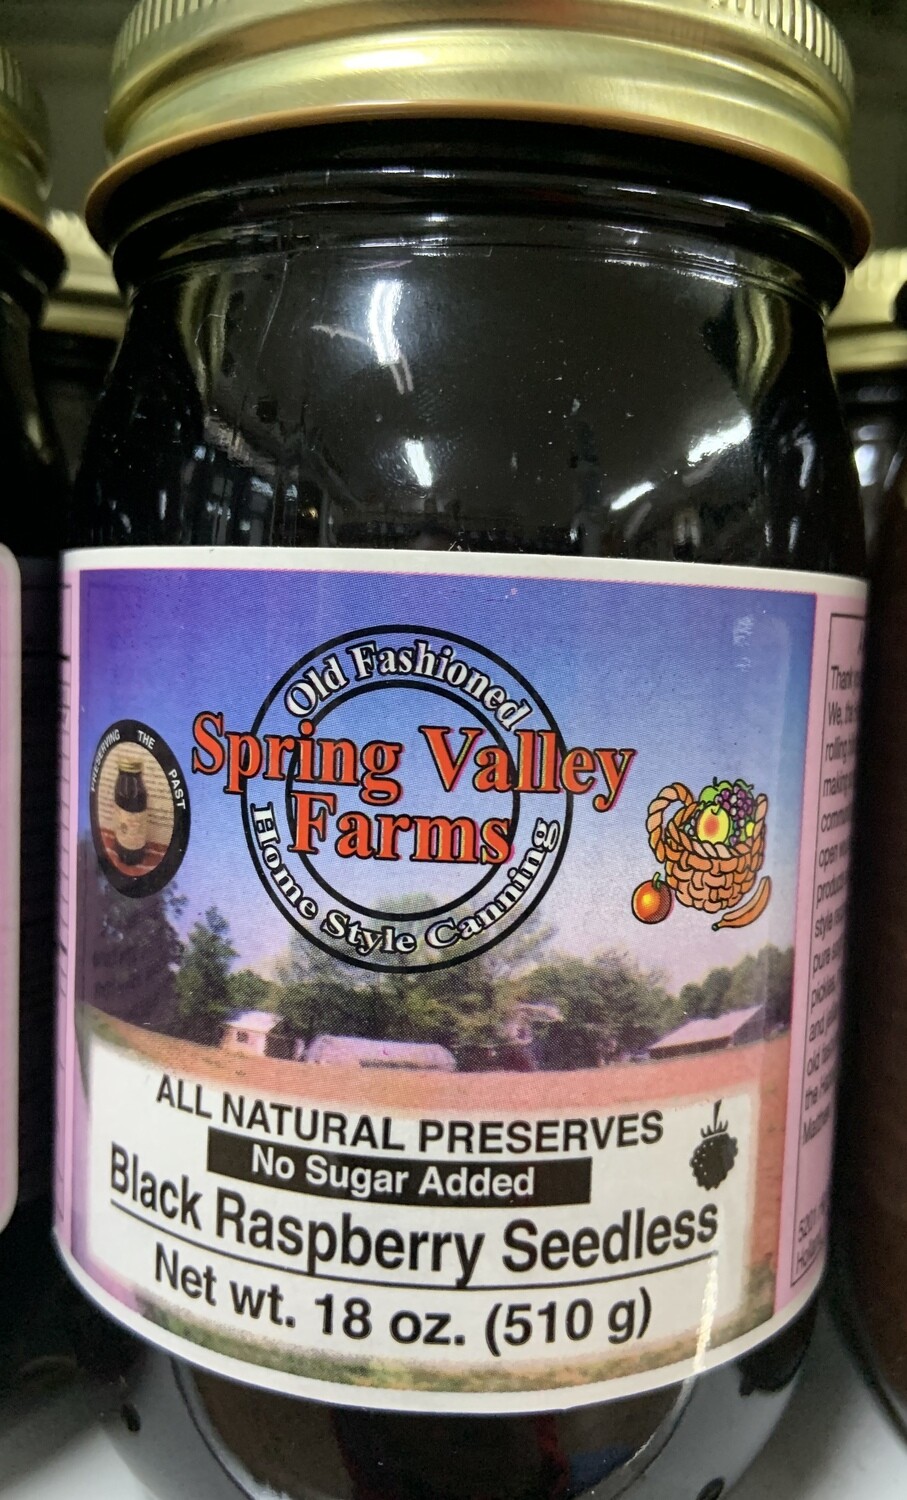 Spring Valley Farms No Sugar Added Fruit Juice Sweetened Black Raspberry Seedless Preserves 19oz